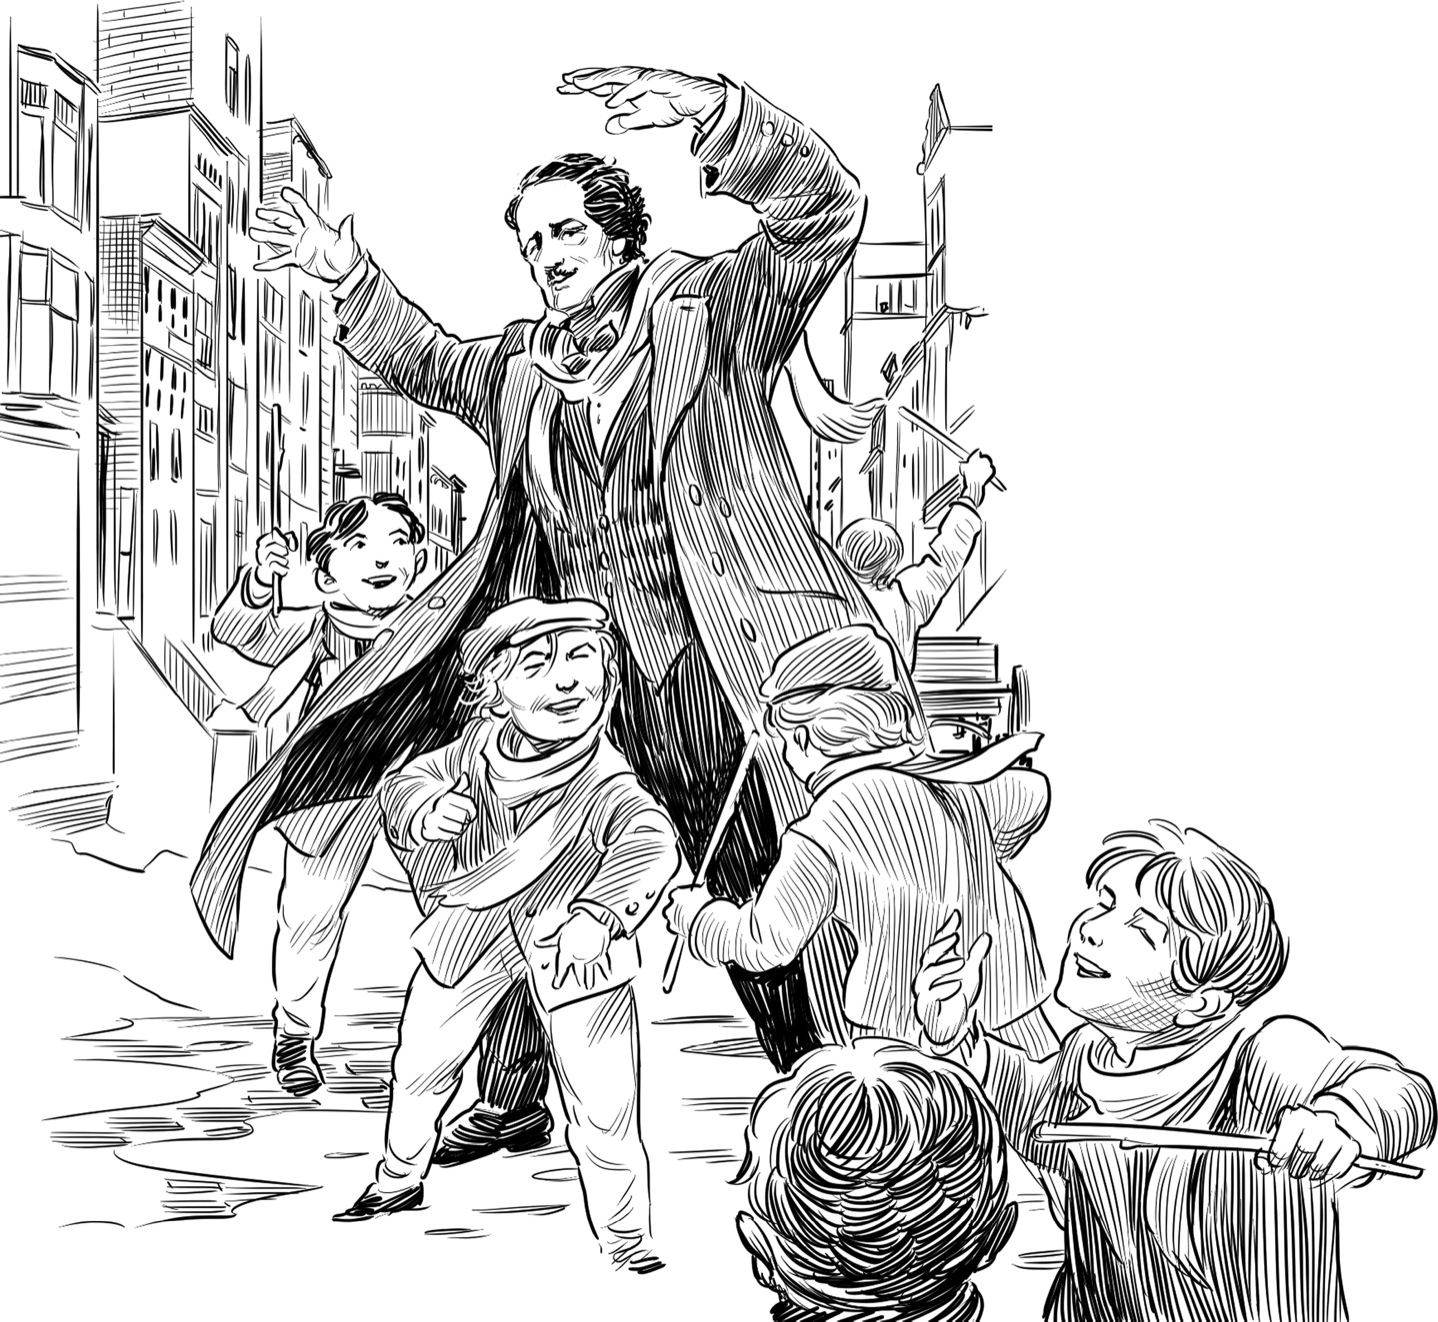 Edgar Allan Poe walked briskly down a New York City street one winter day early - photo 4